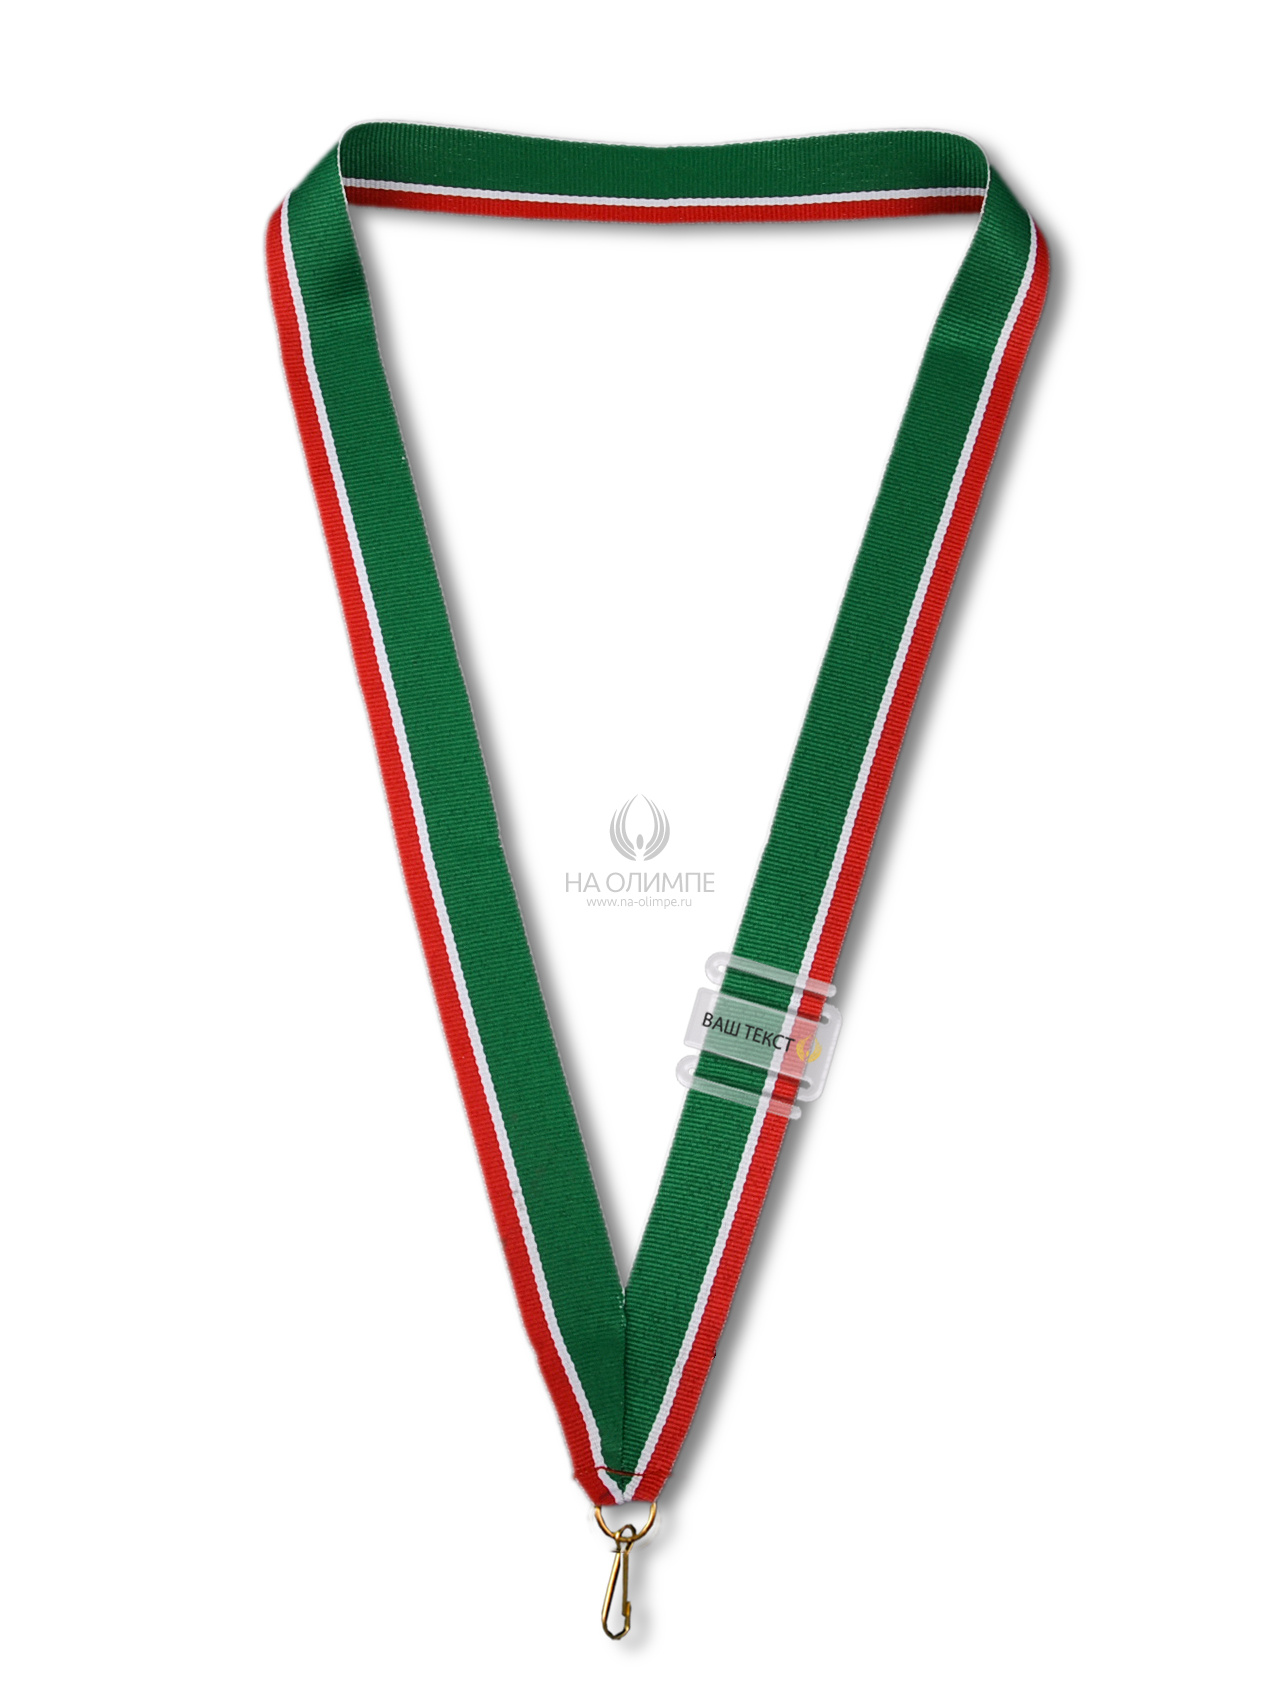 Лента для медали (Чечня), ширина ленты 22 мм